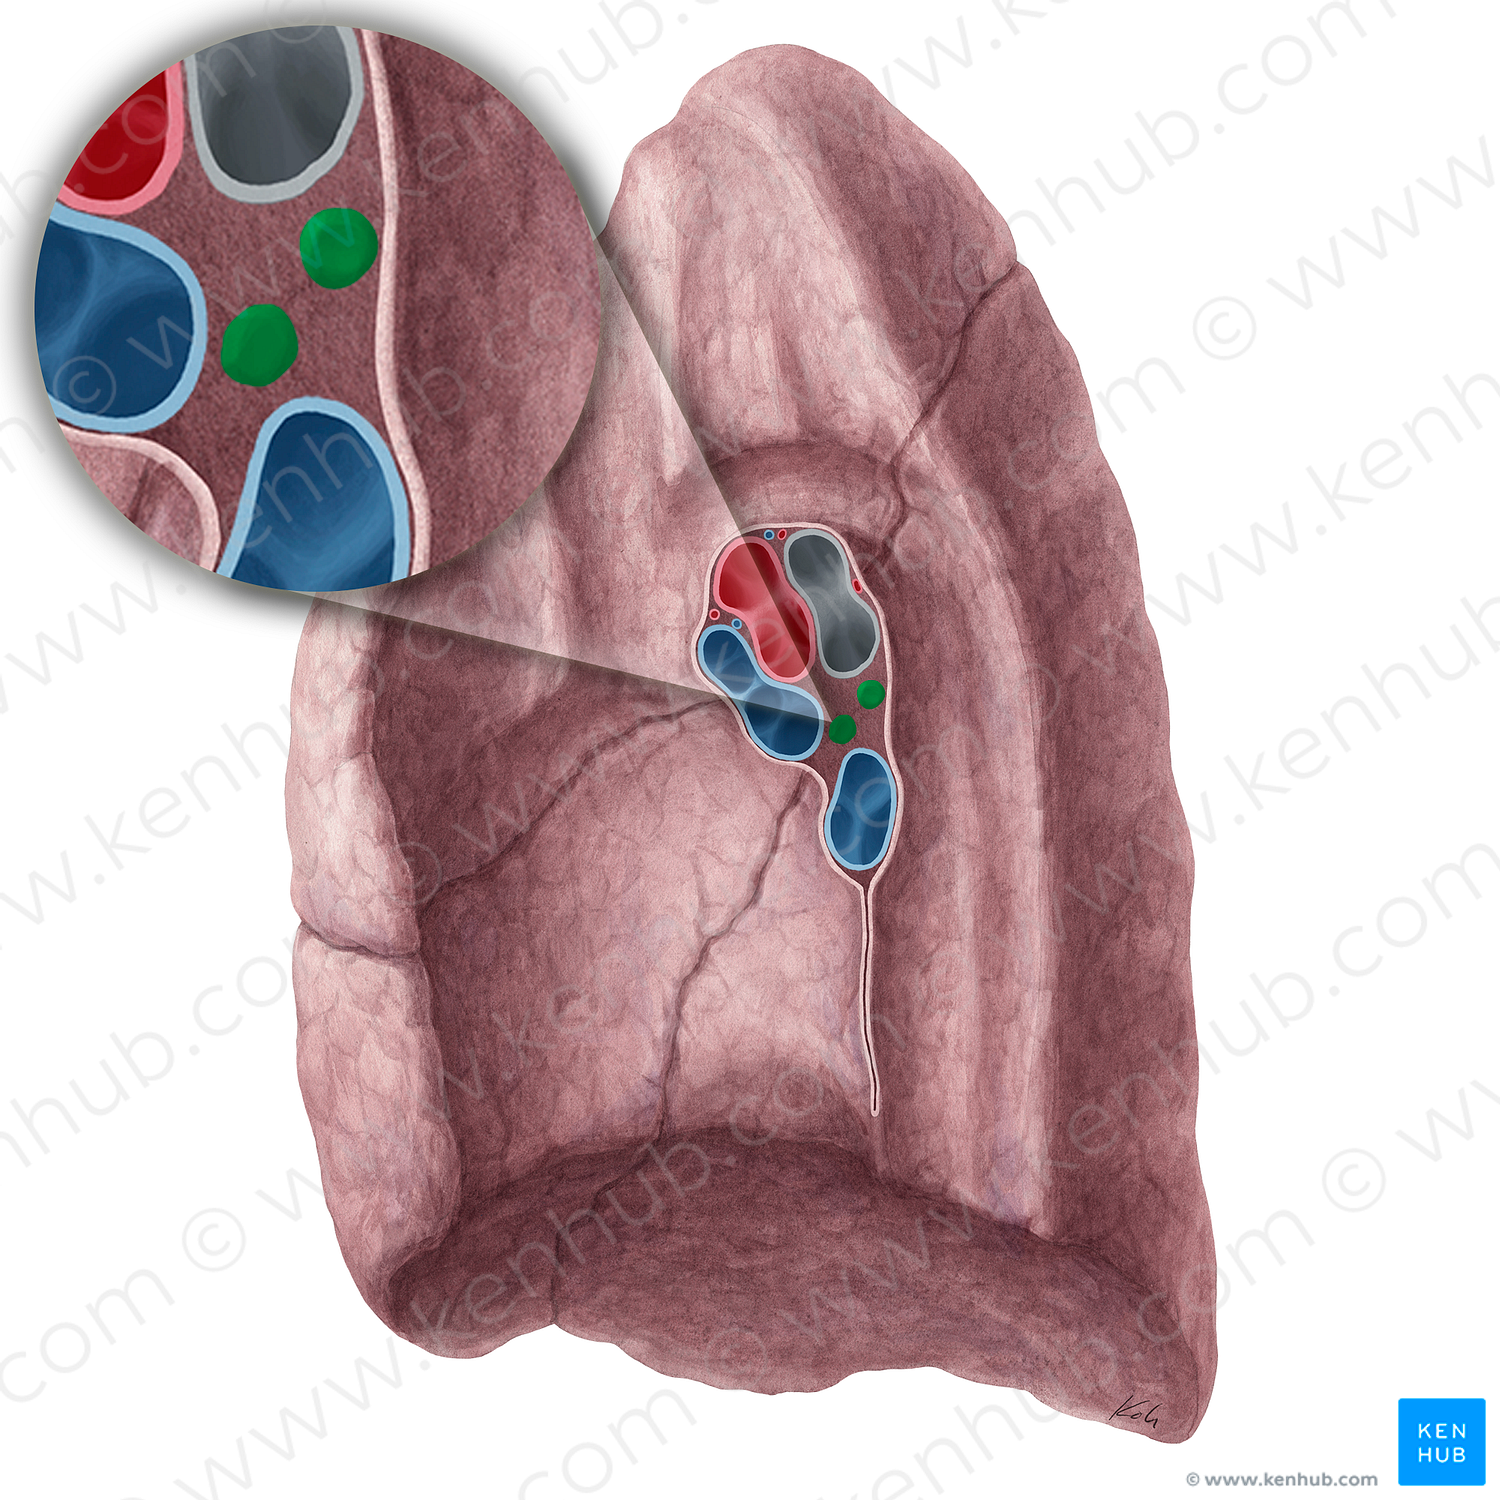 Bronchopulmonary lymph nodes (#21483)